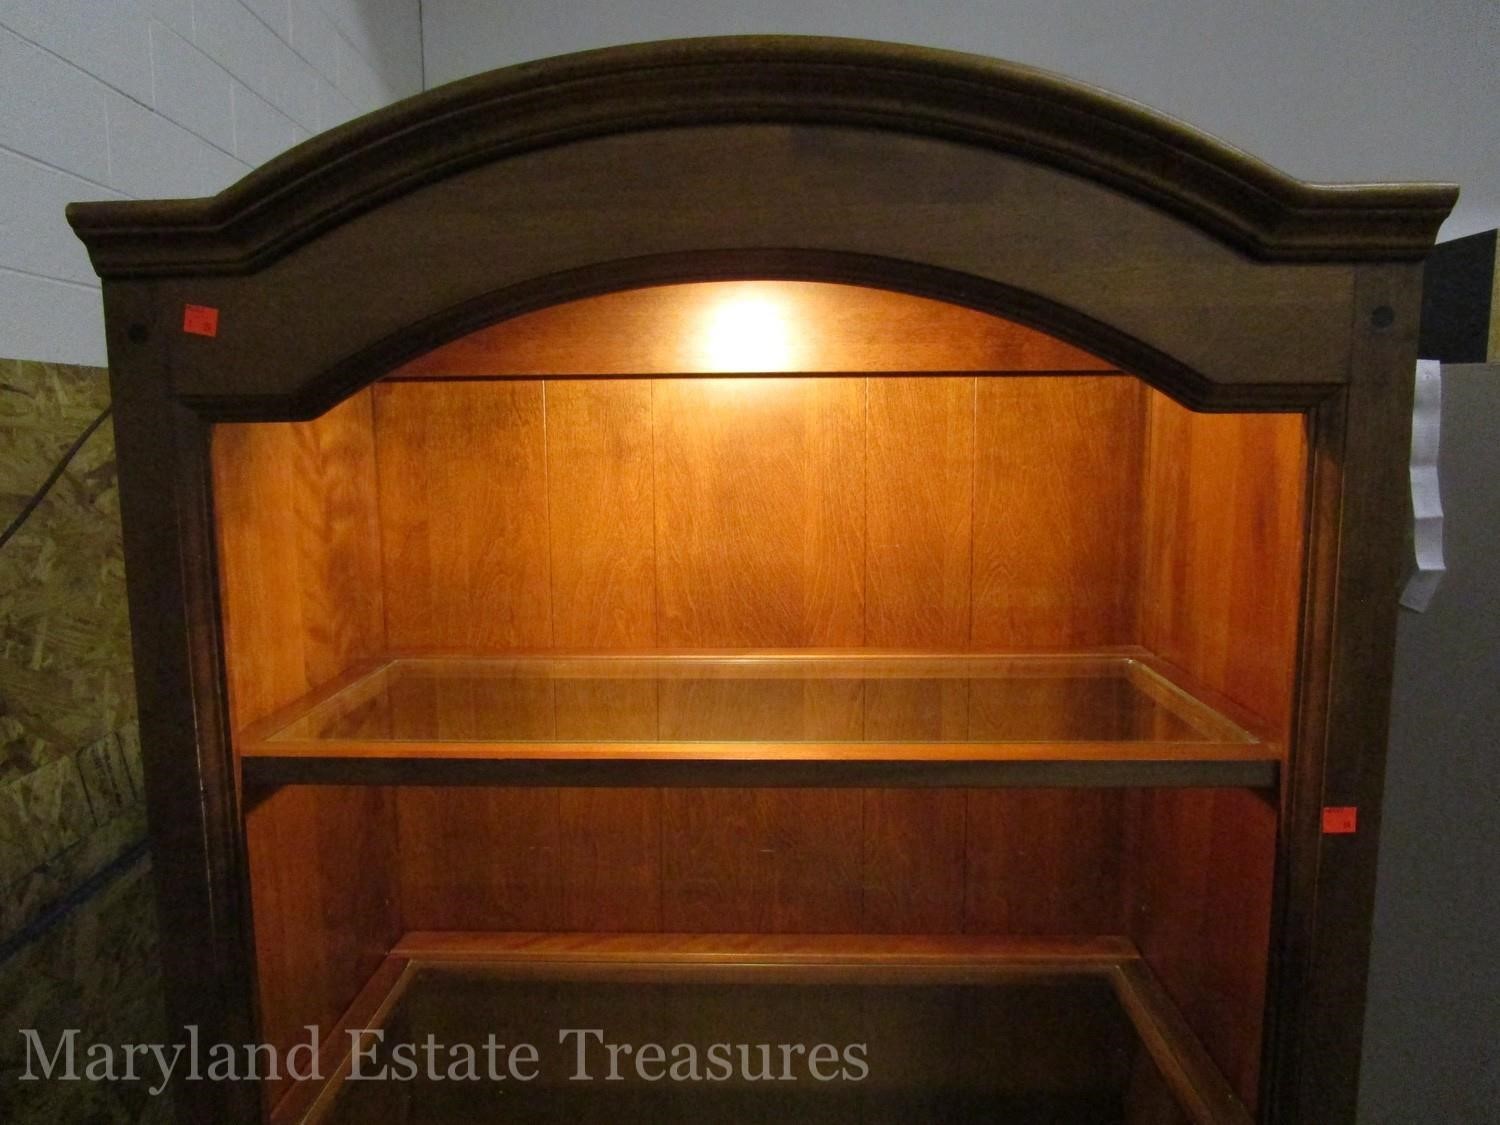 Maryland Estate Treasures November Estate Auction